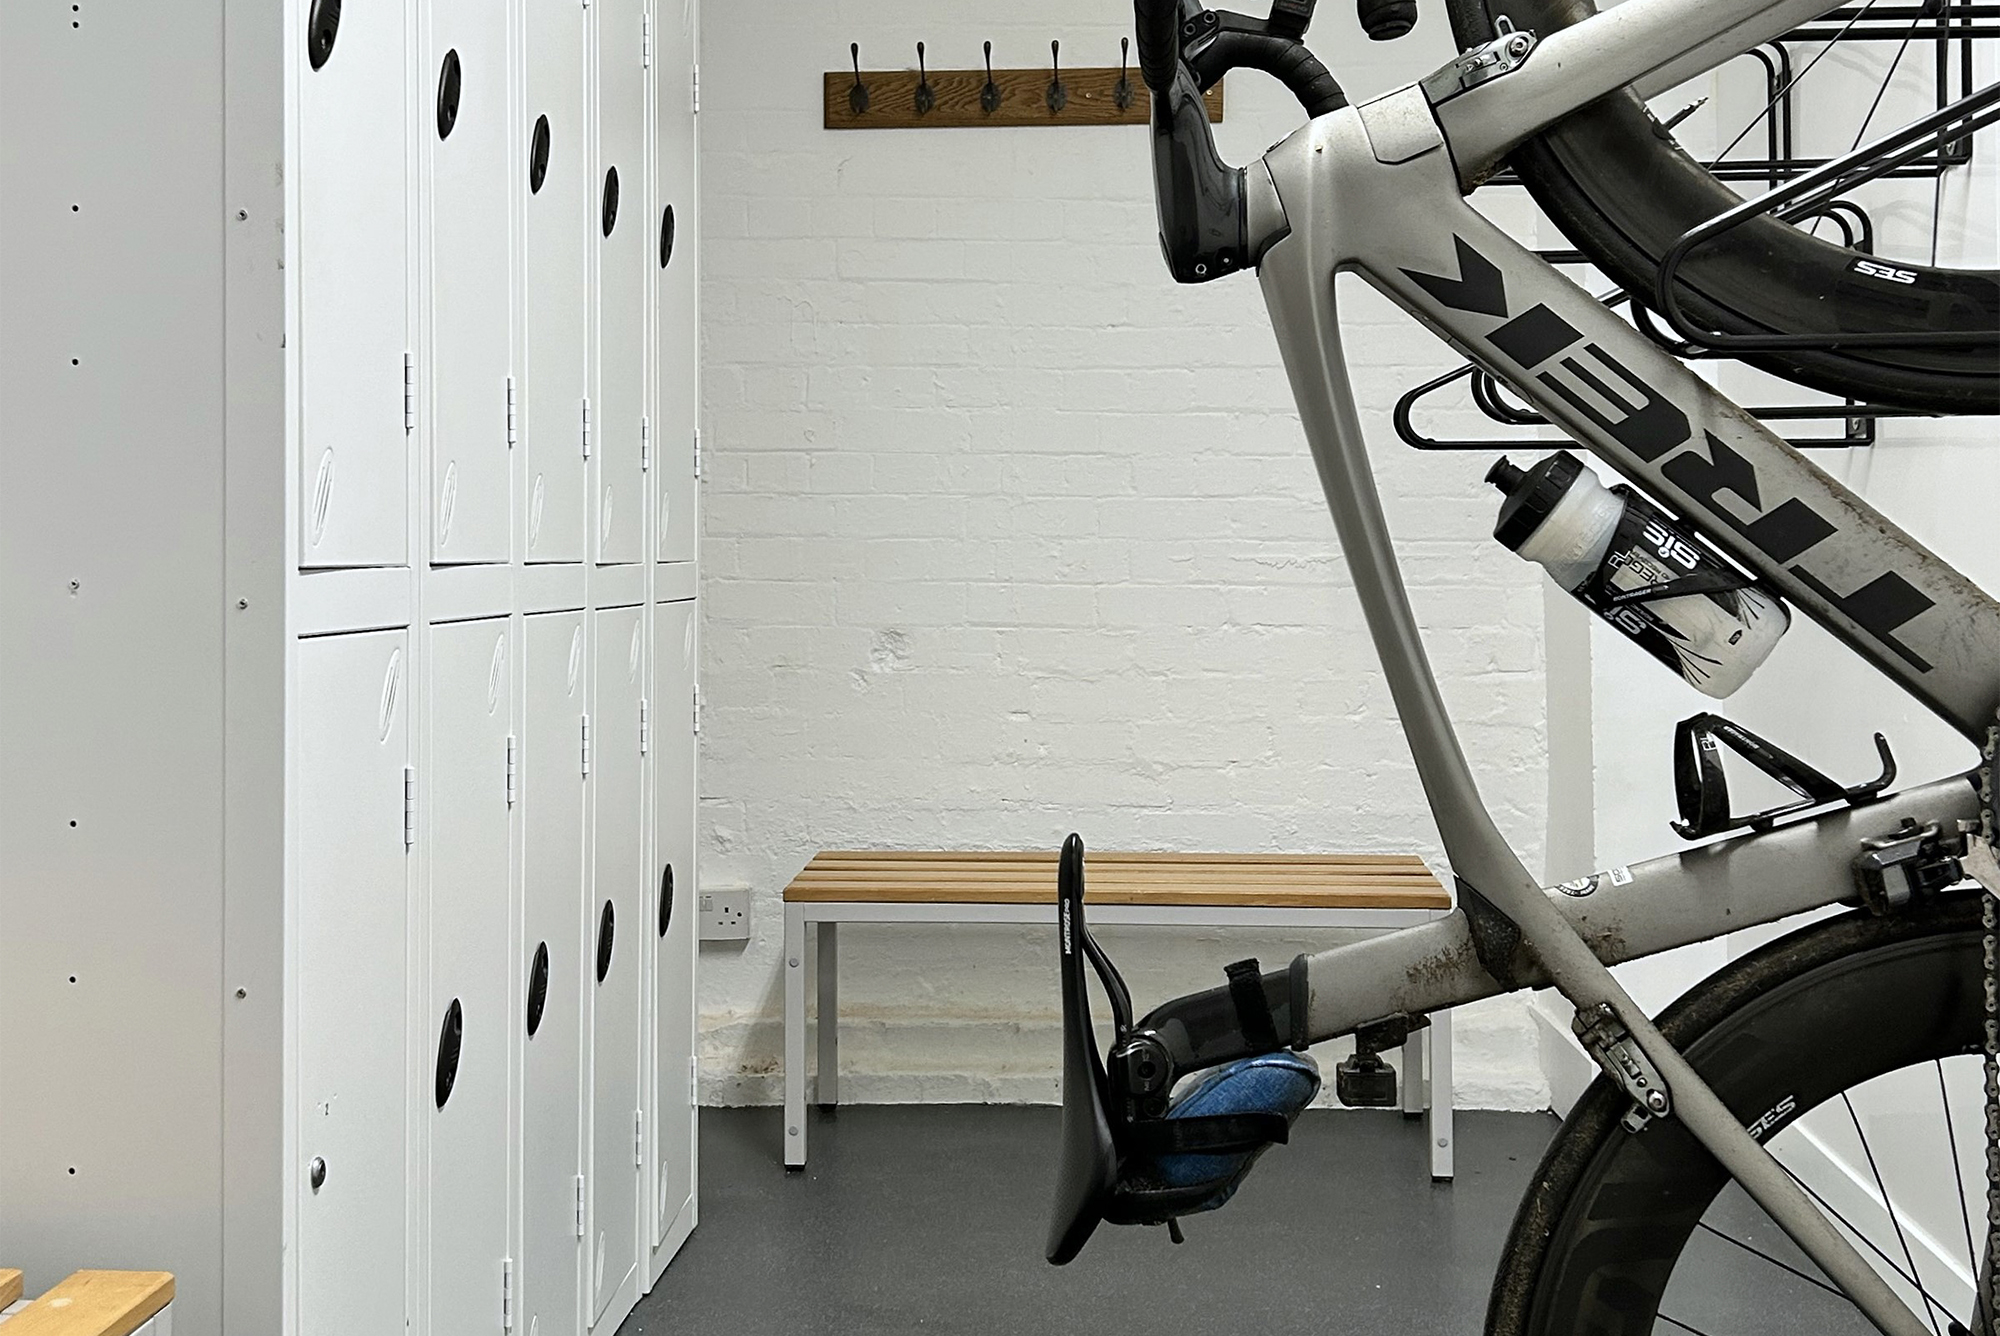 Bicycle store with grey Trek racing bike hanging on wall and white metal lockers.